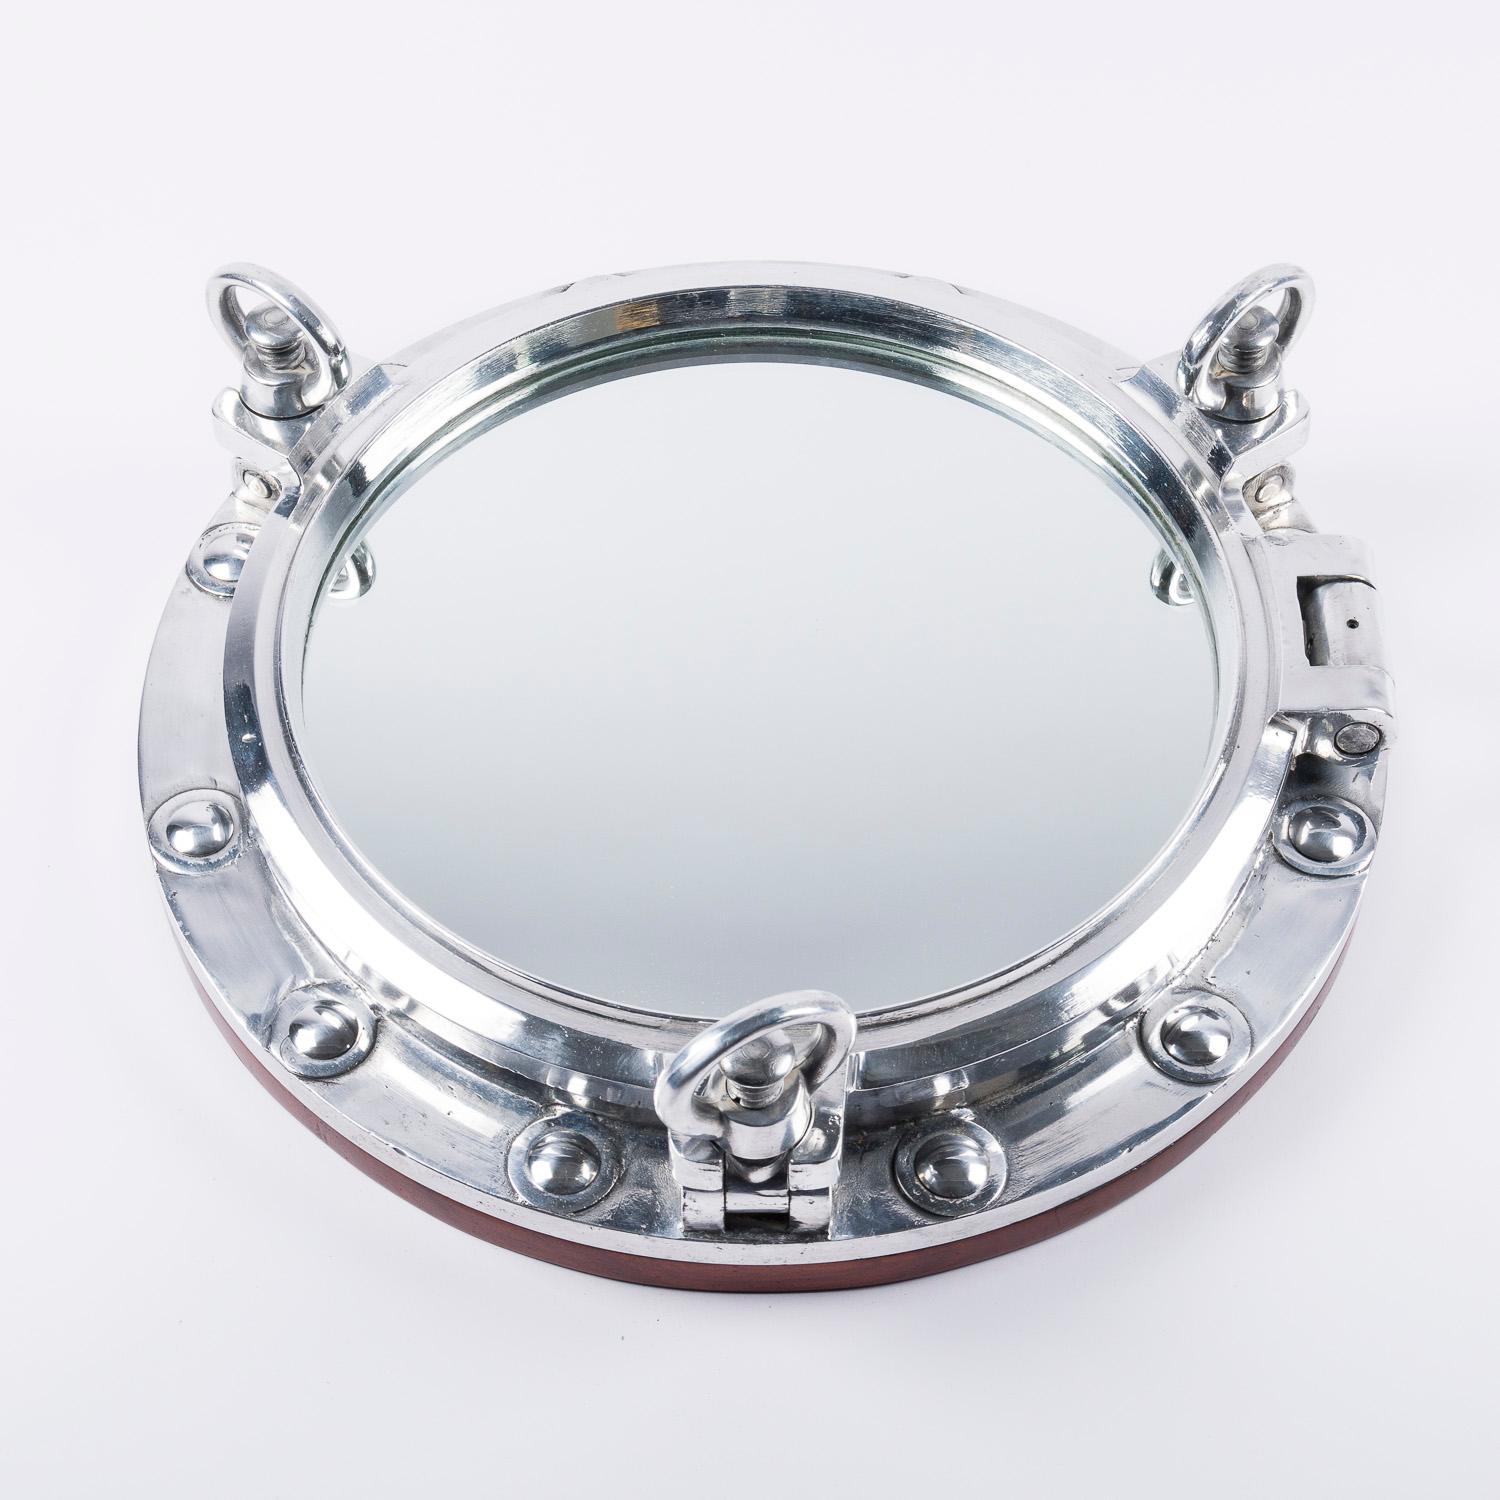 ship's circular aluminium porthole mirror for wall mounting 3